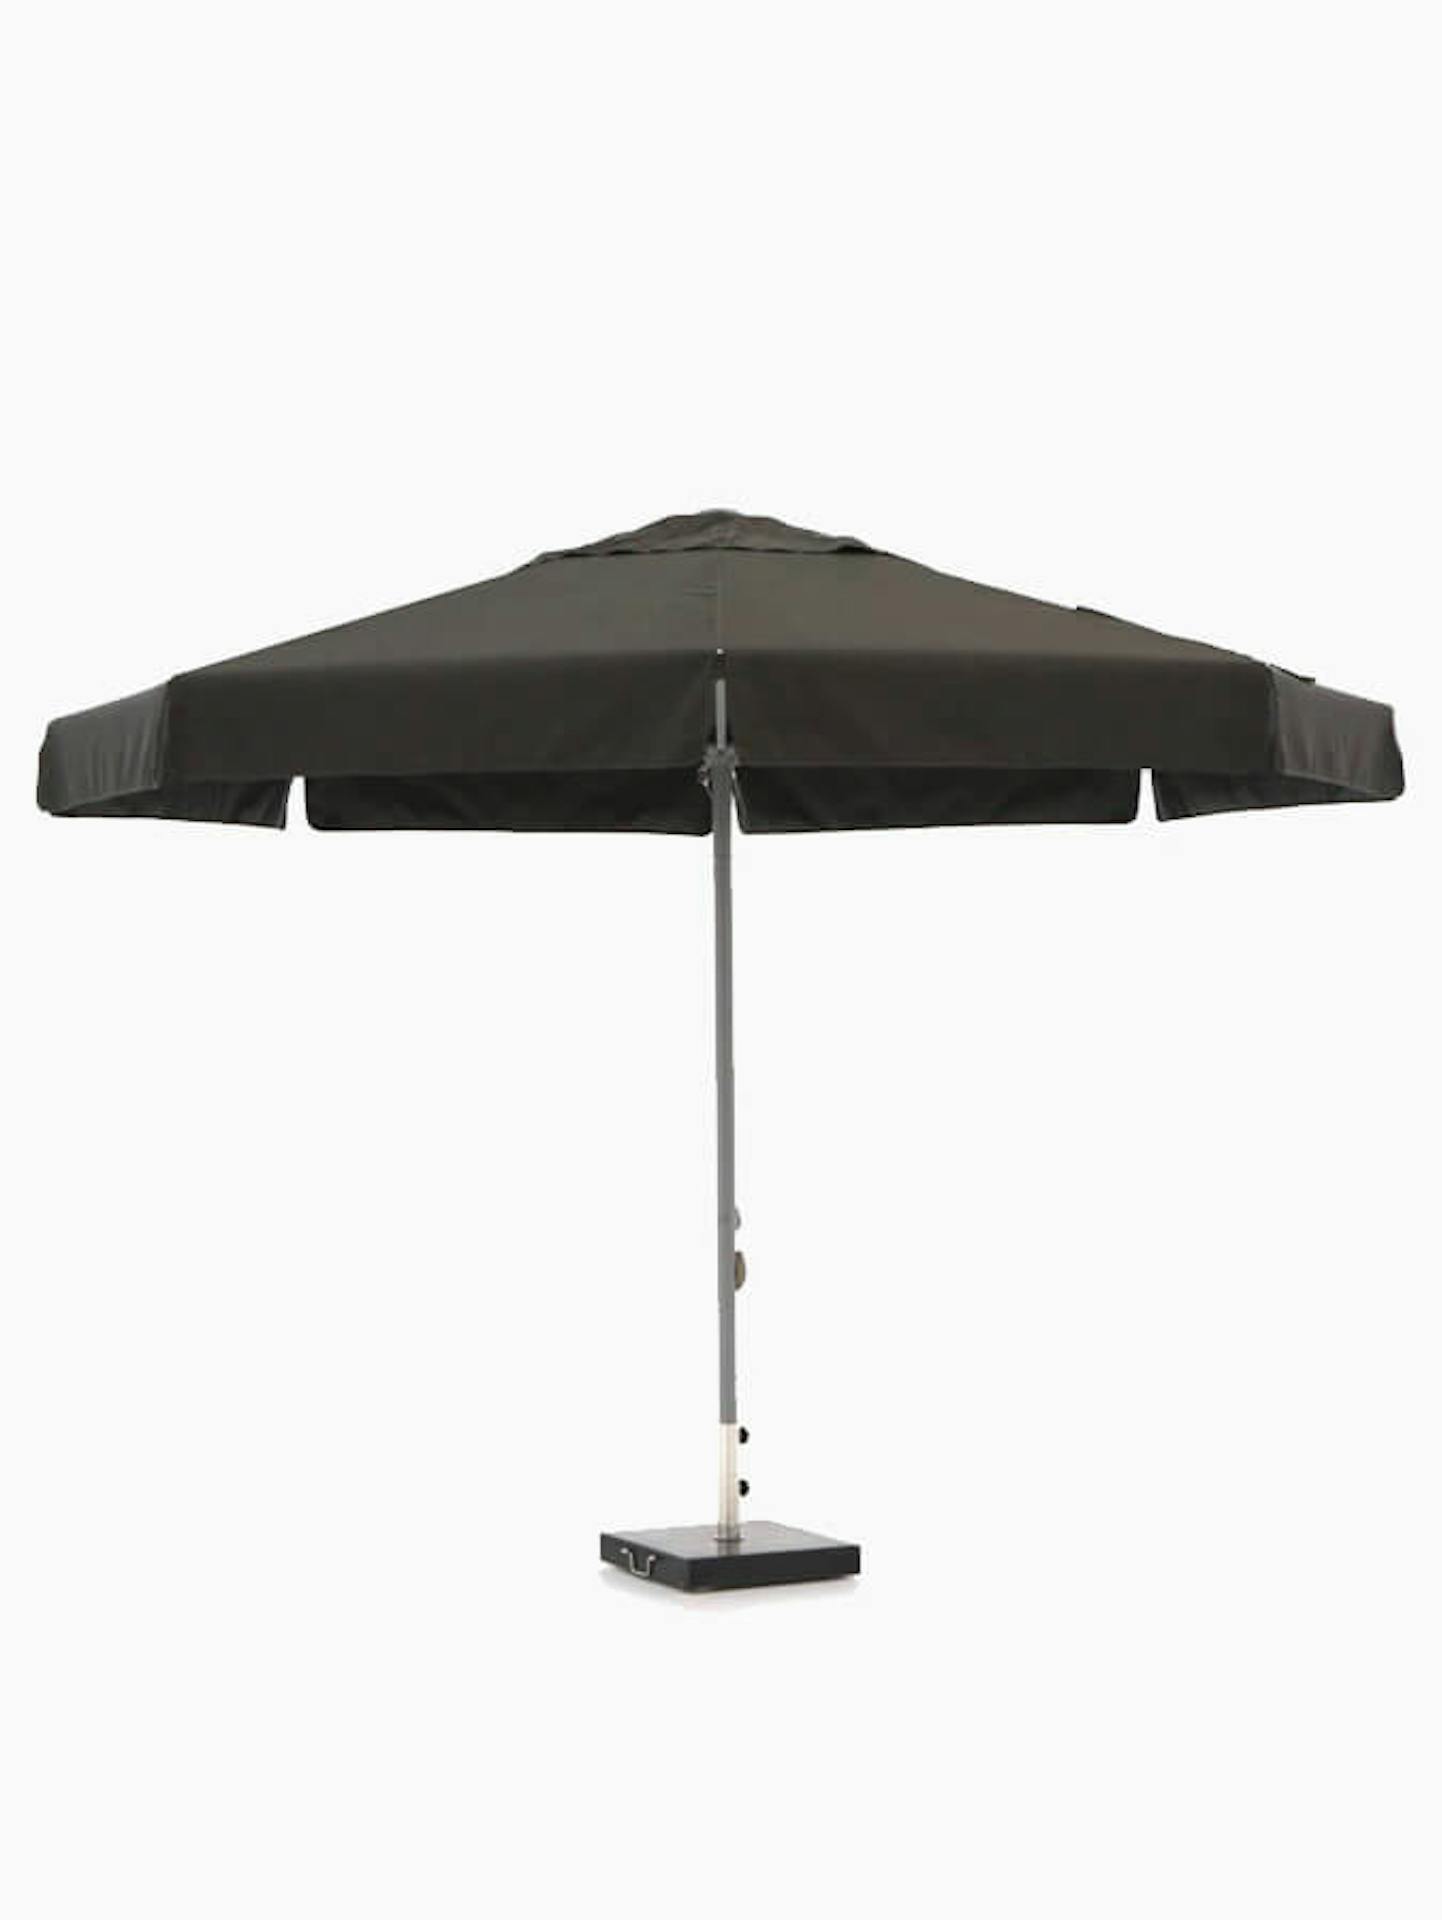 Ronde parasol 300 cm | DVC - Expert in parasols